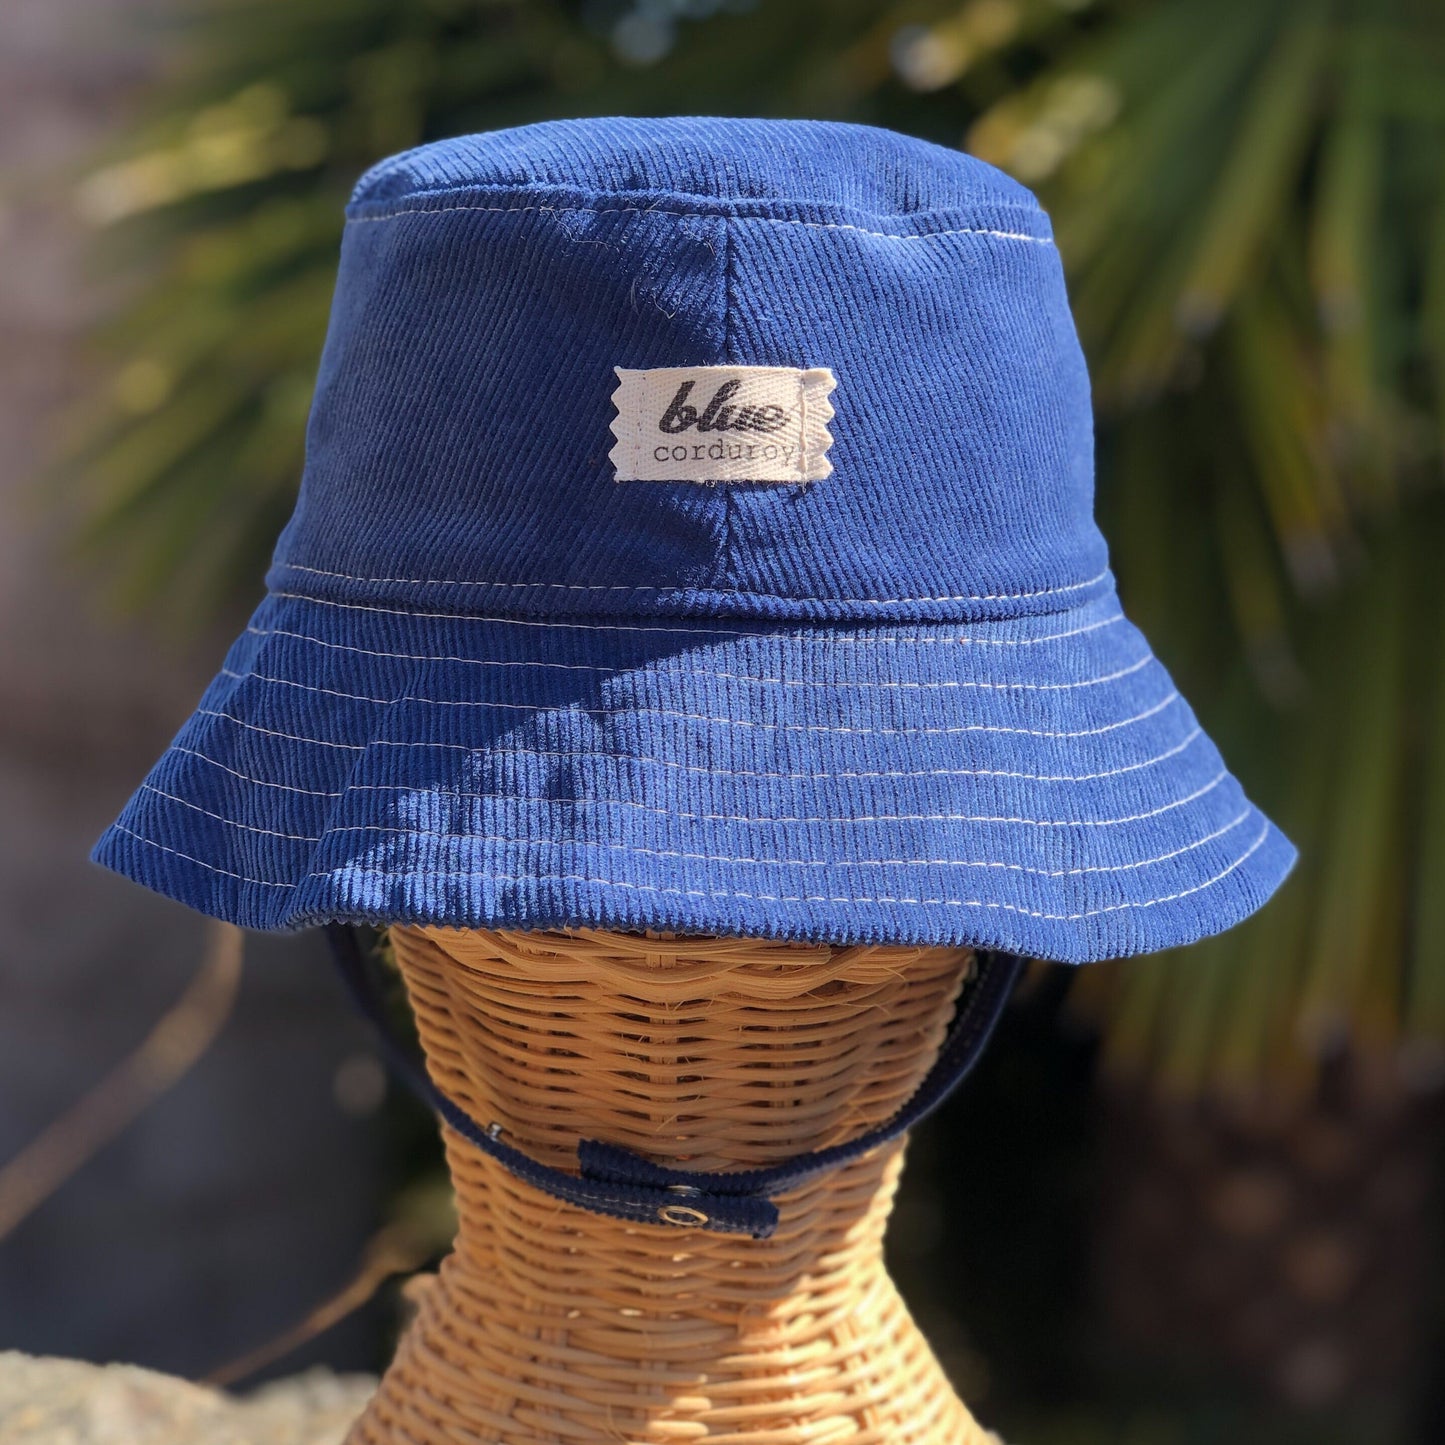 Blue Corduroy Bucket Hat for Babies on rattan mannequin head.